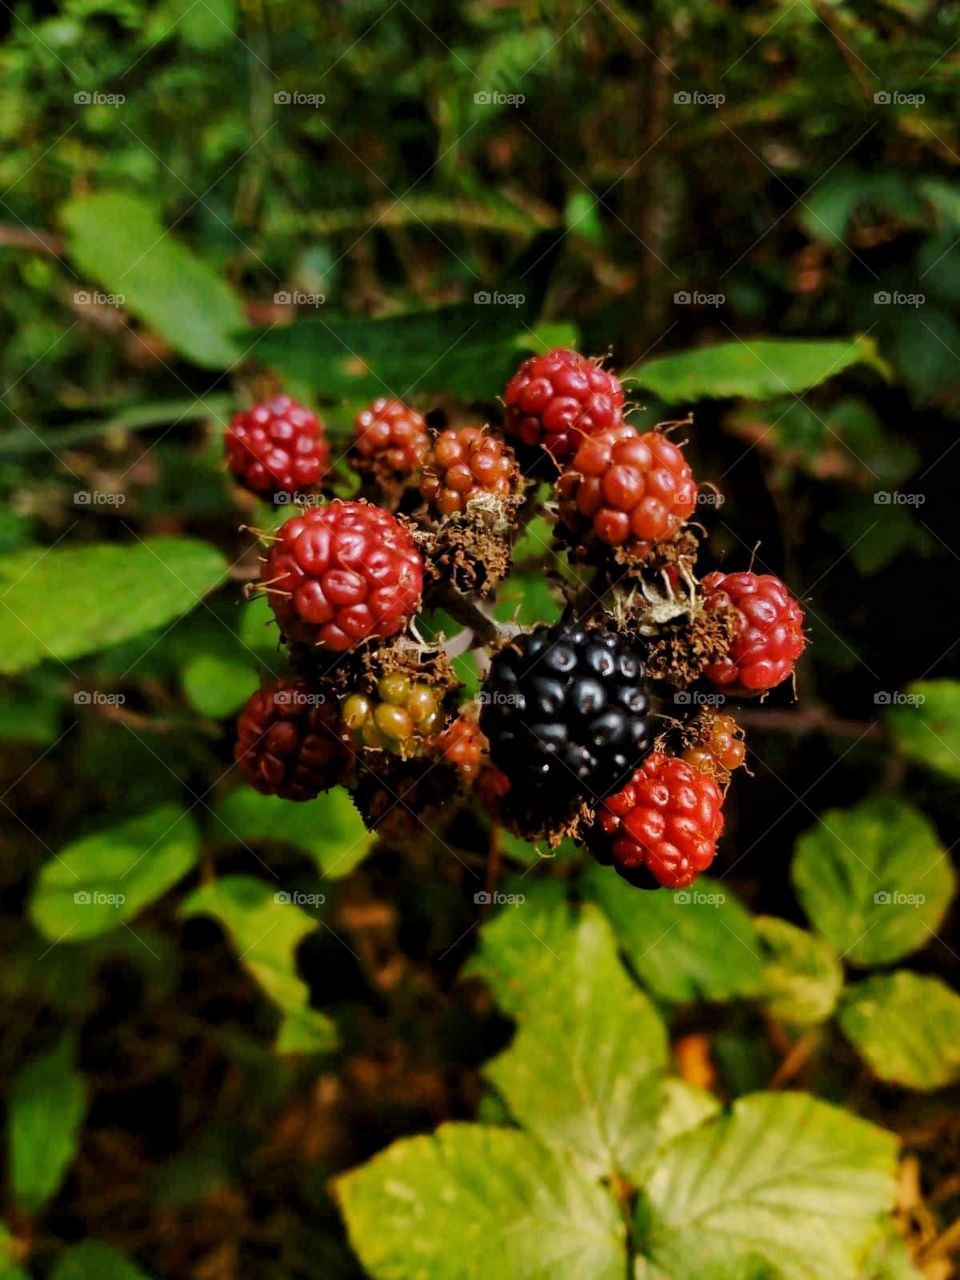 Raspberries in my backyard